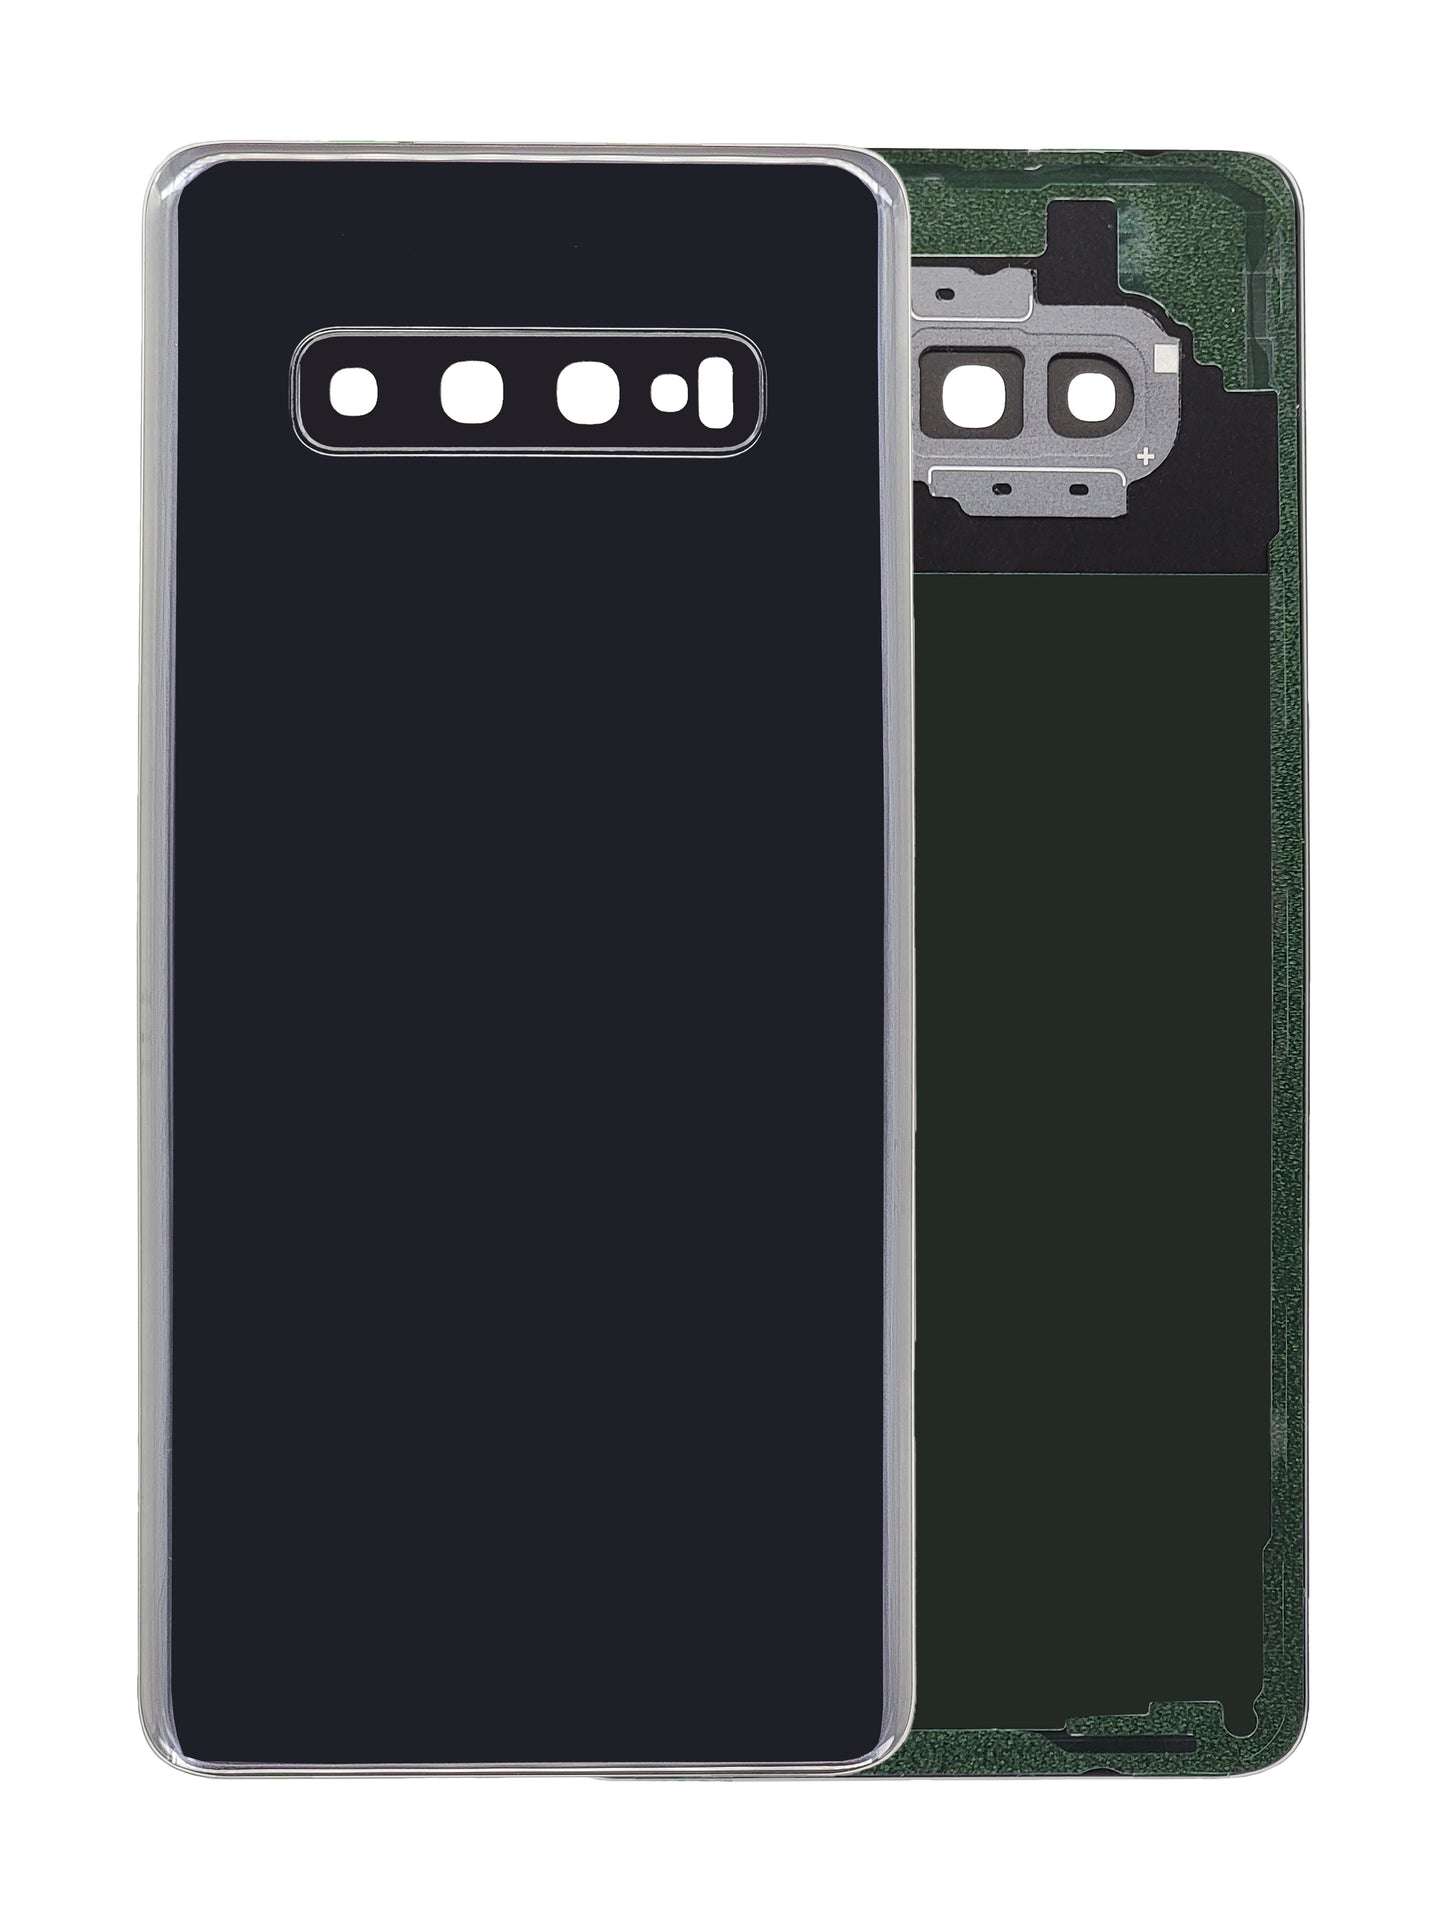 SGS S10 Plus Back Cover (Black)